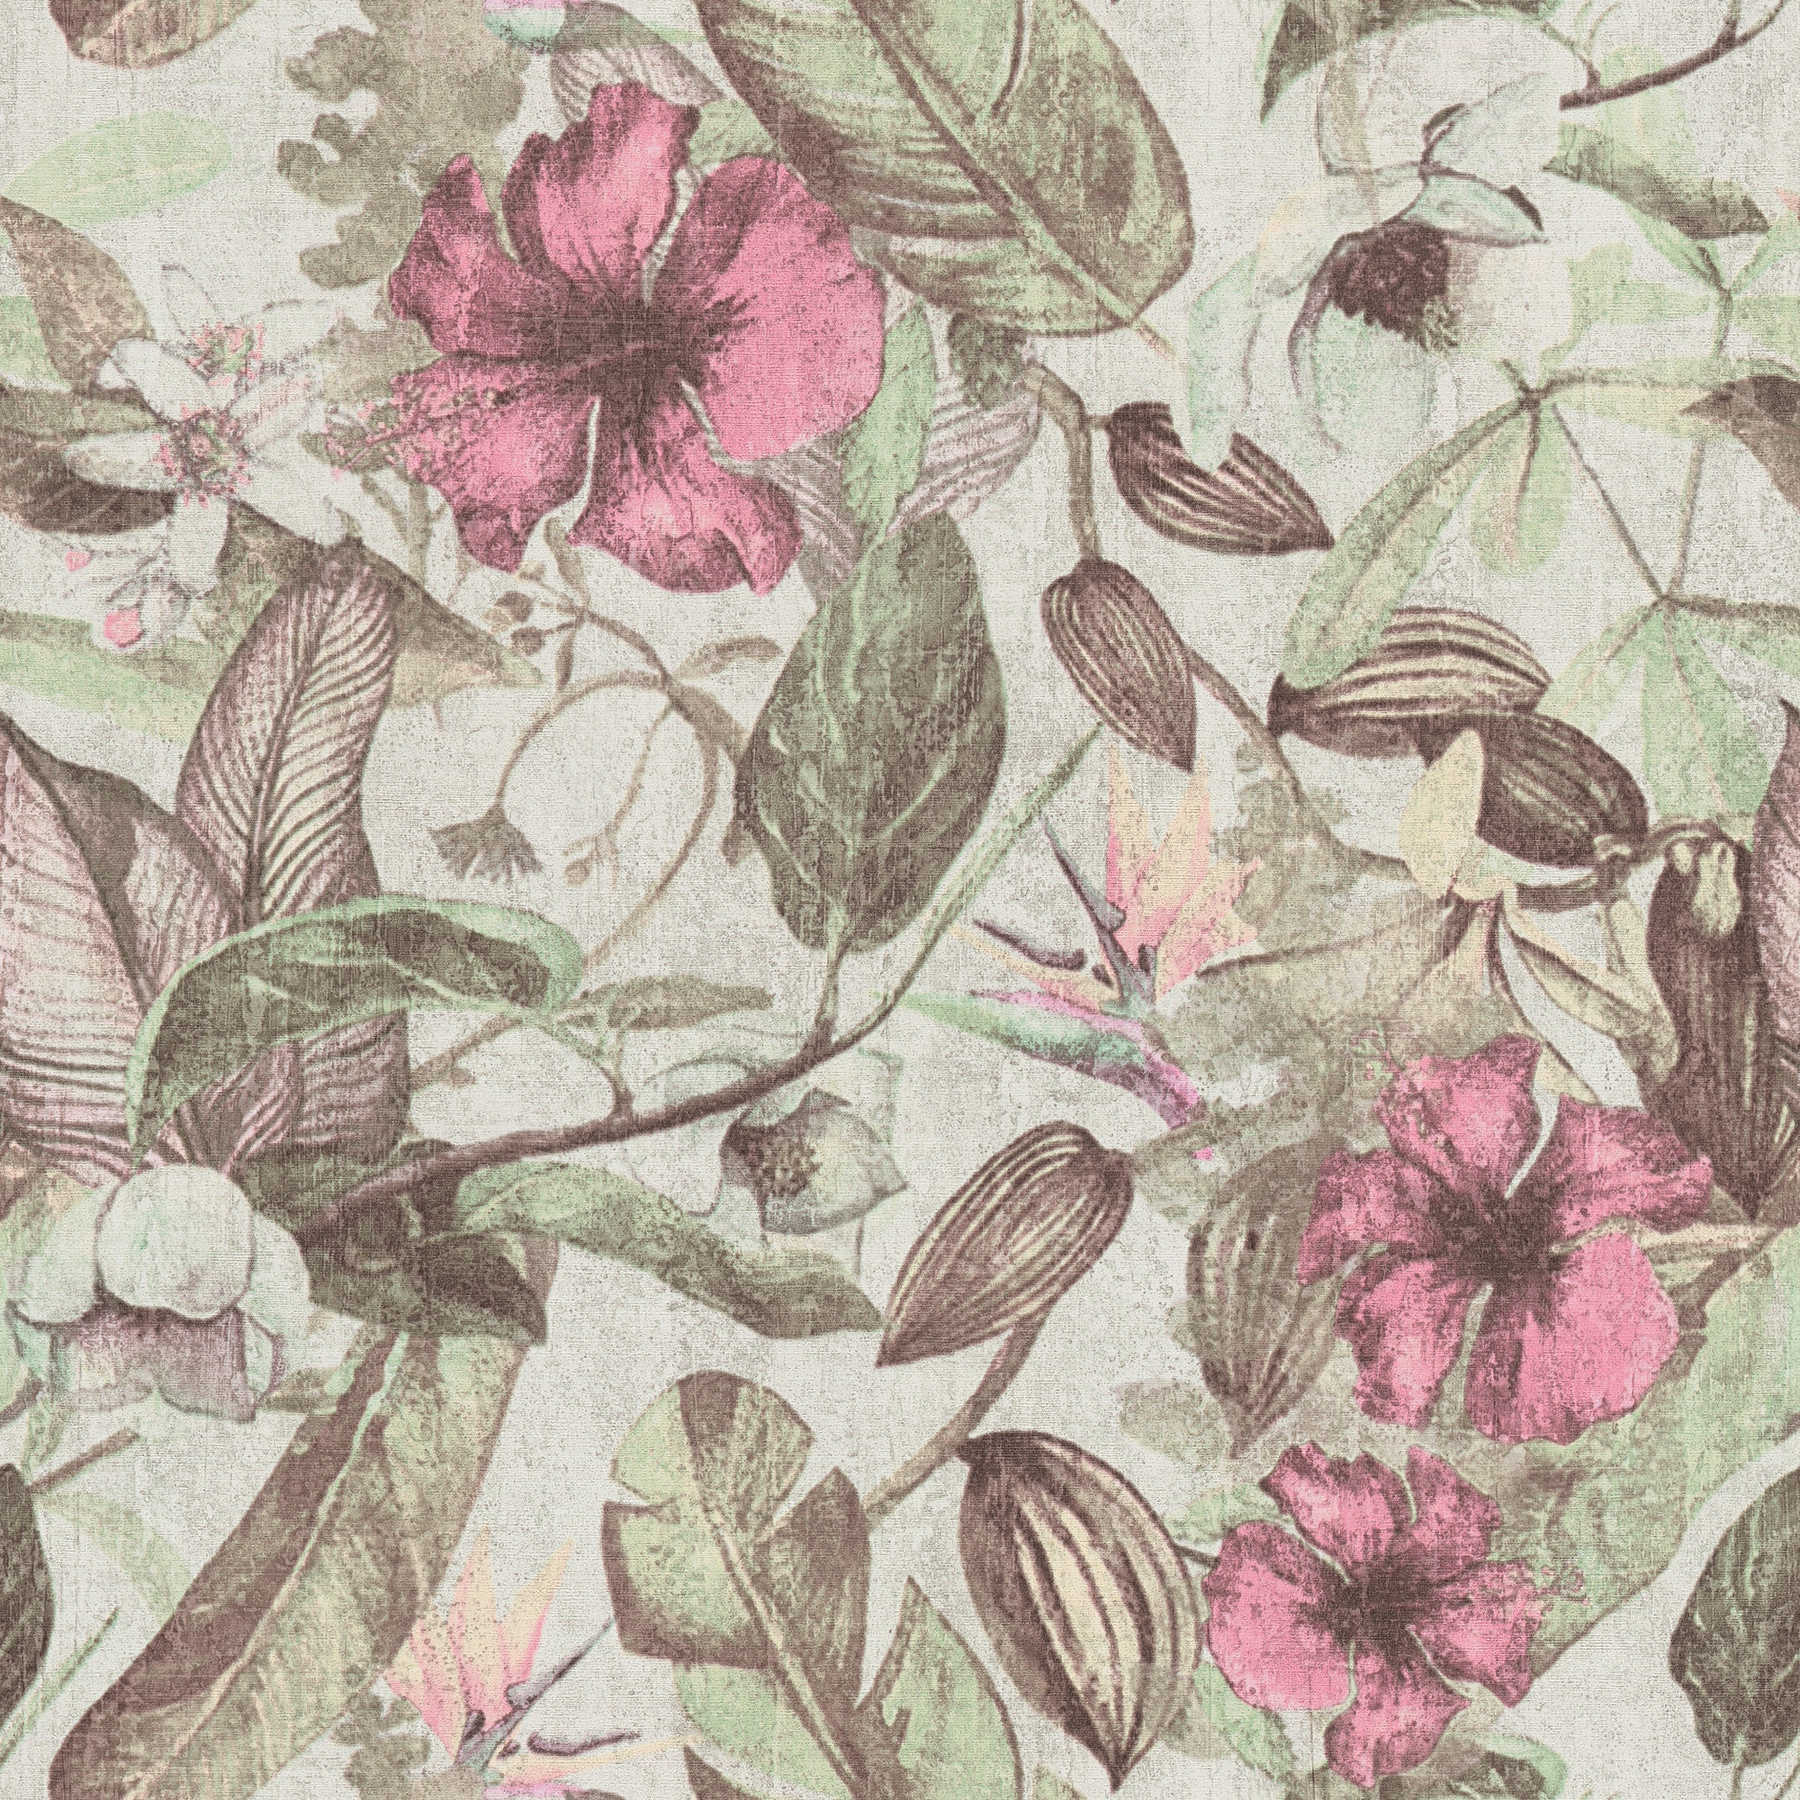 Tapete Blütenmuster, Tropen Stil & Textil-Optik – Rosa, Grün, Braun
